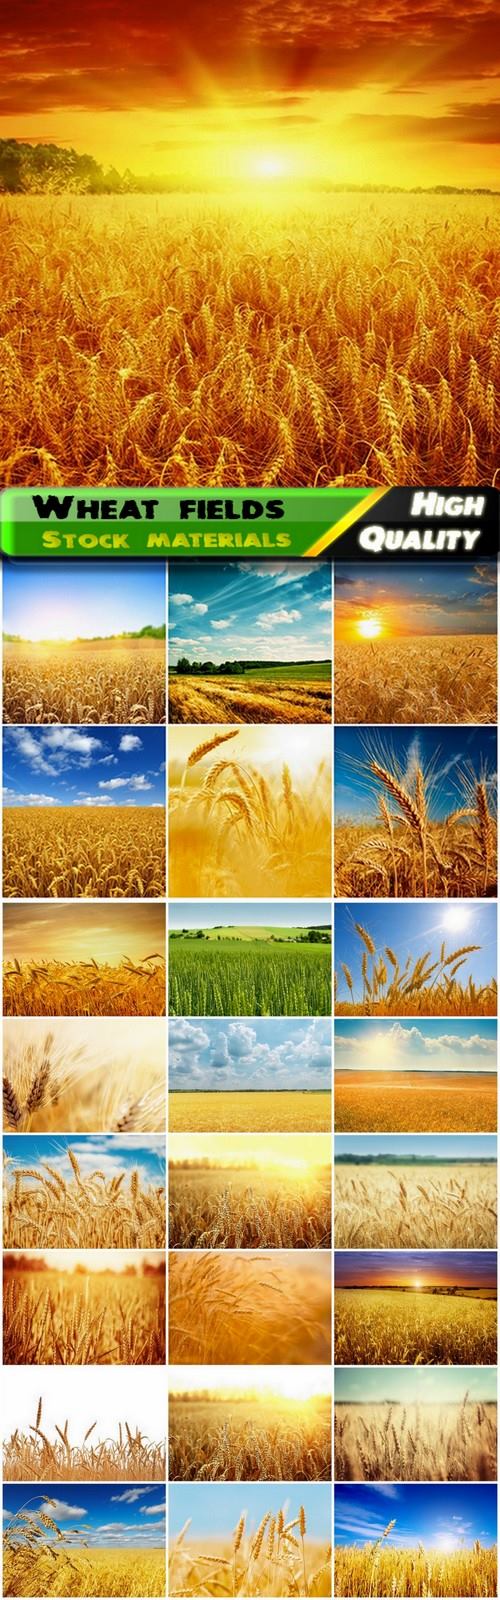 Summer wheat fields and landscpes - 25 HQ Jpg